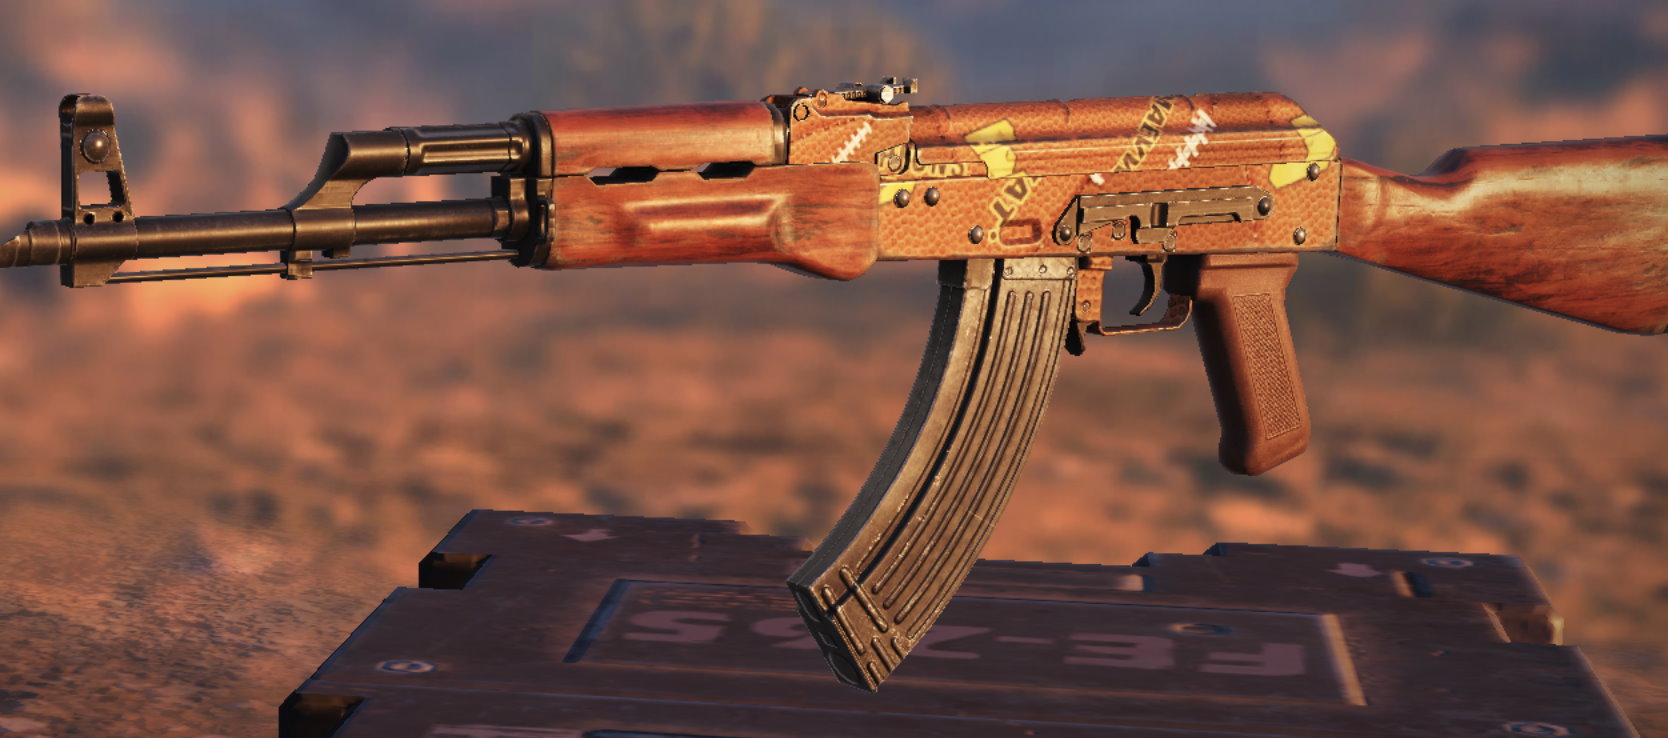 AK-47 Gridiron Football, Uncommon camo in Call of Duty Mobile